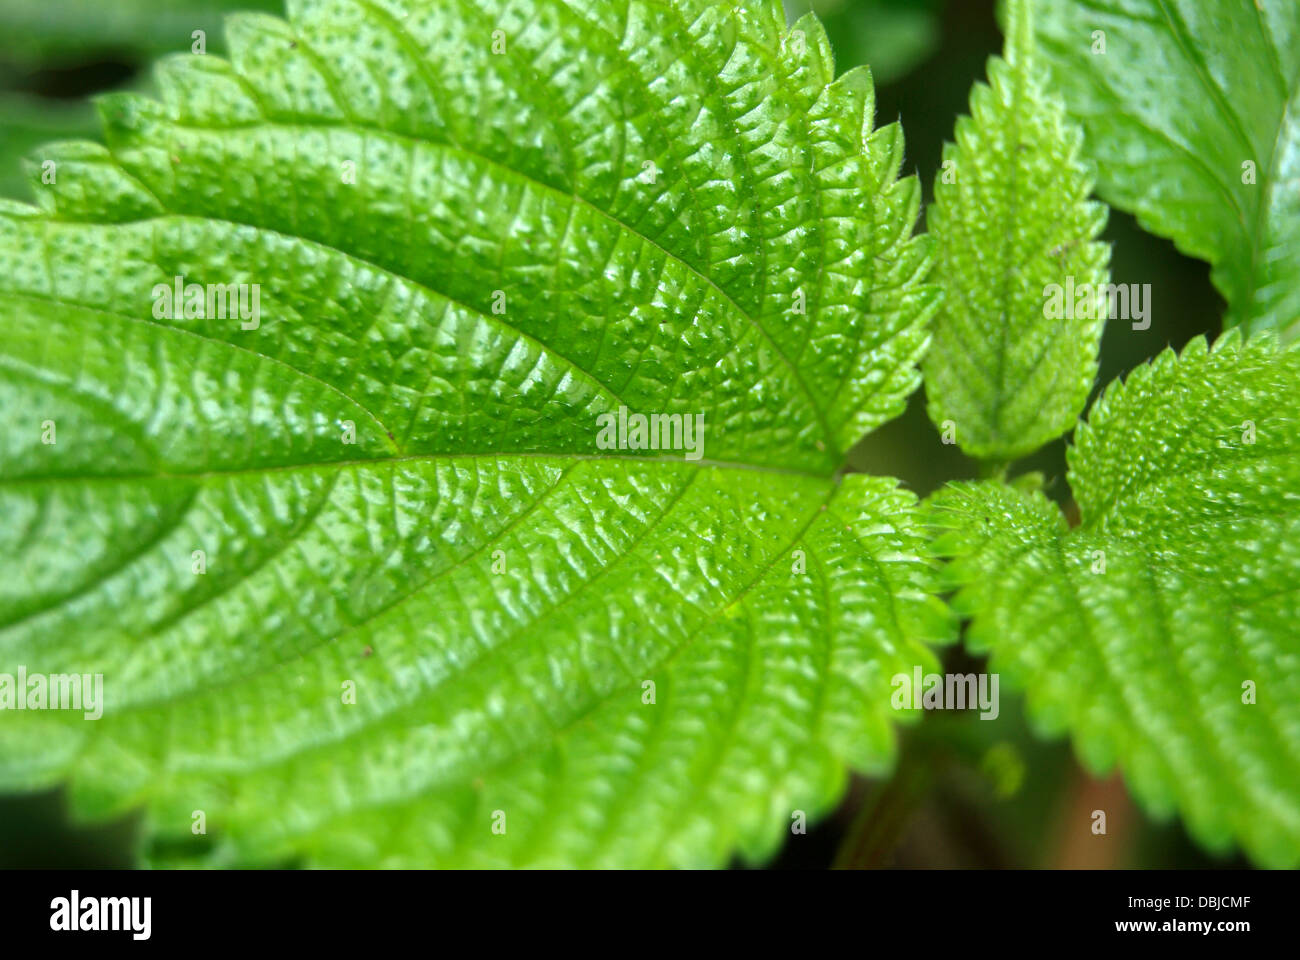 Choriyanam Nettles or Climbing Nettle Ayurvedic Medicinal Plant Leaf Stock Photo